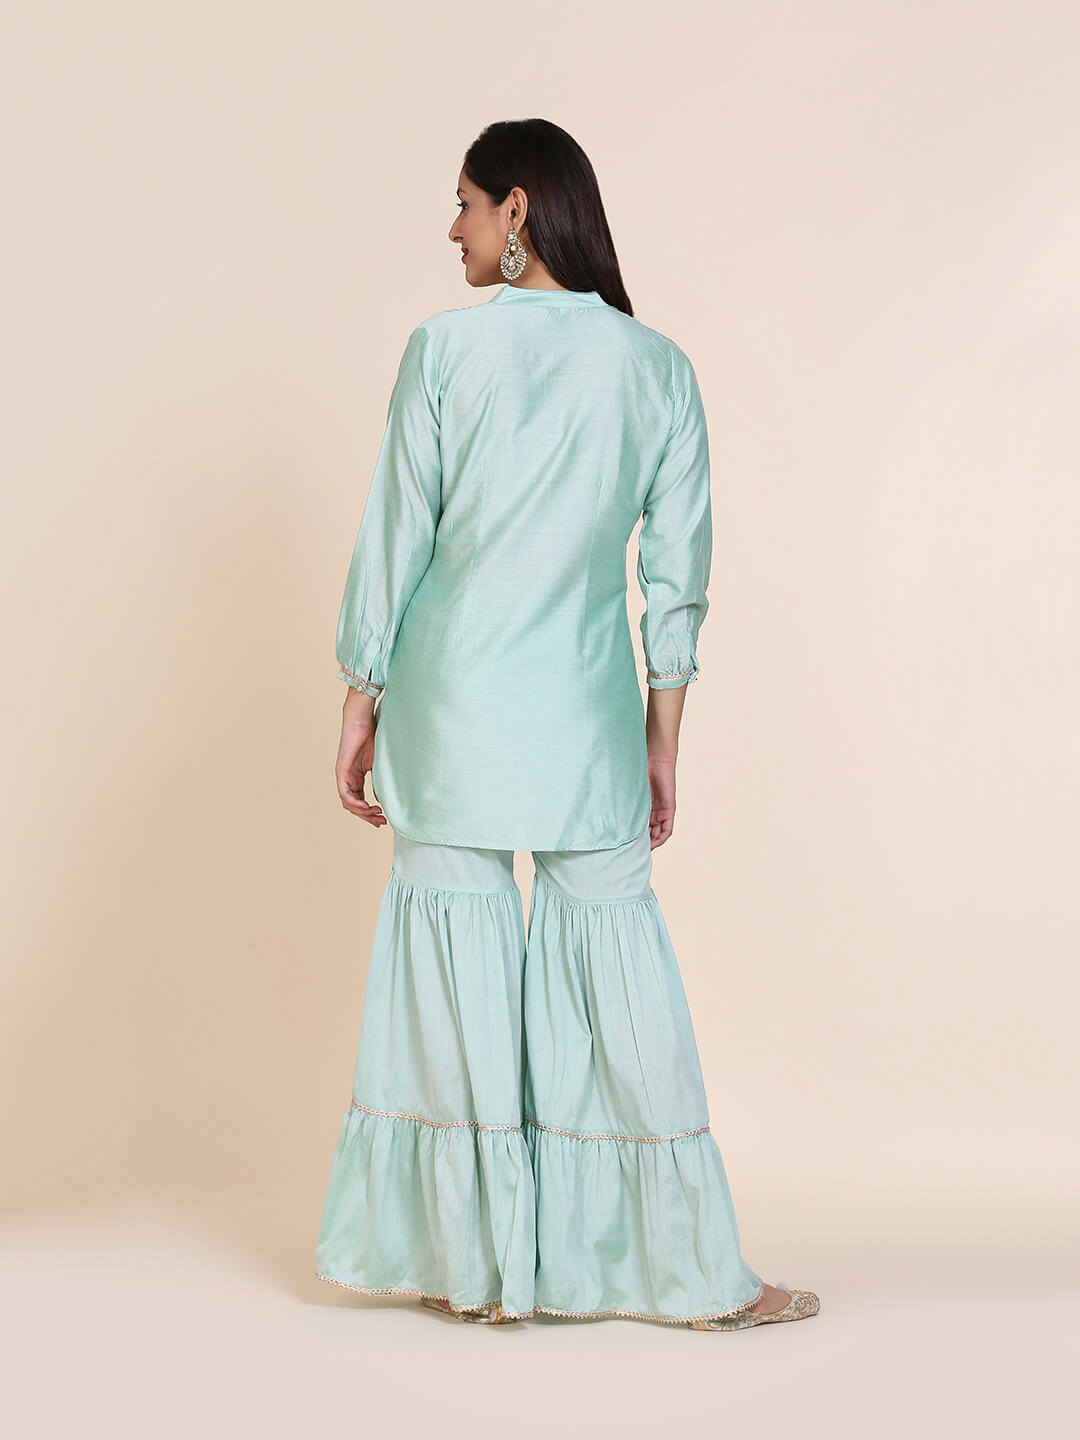 Abhishti cotton silk short kurti with hidden placket, side lace panels & pintucks and bottom